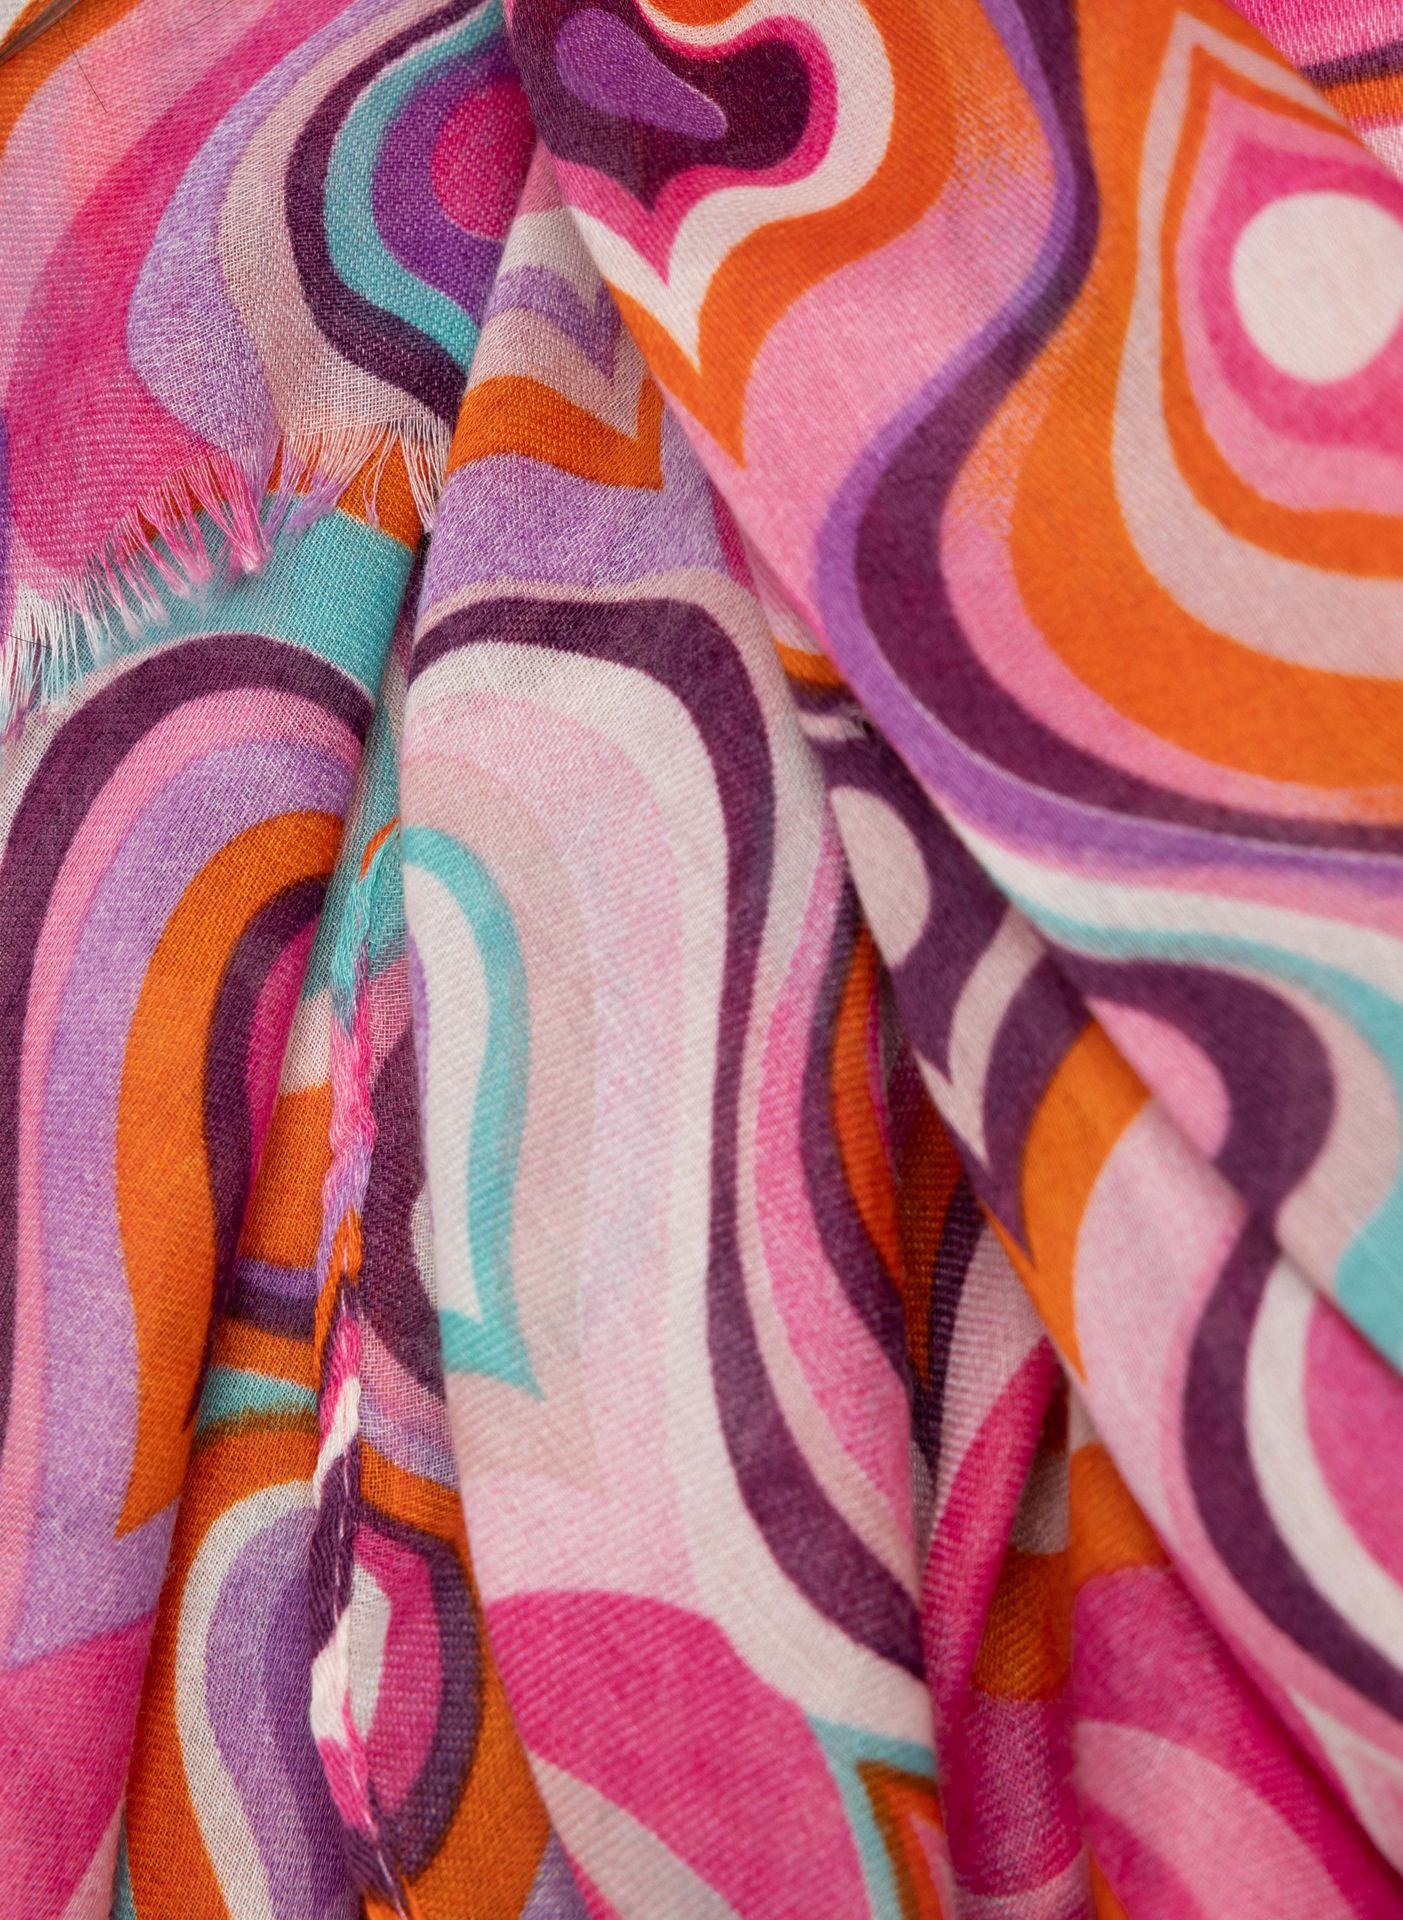 Norah Roze sjaal pink multicolor 213599-920